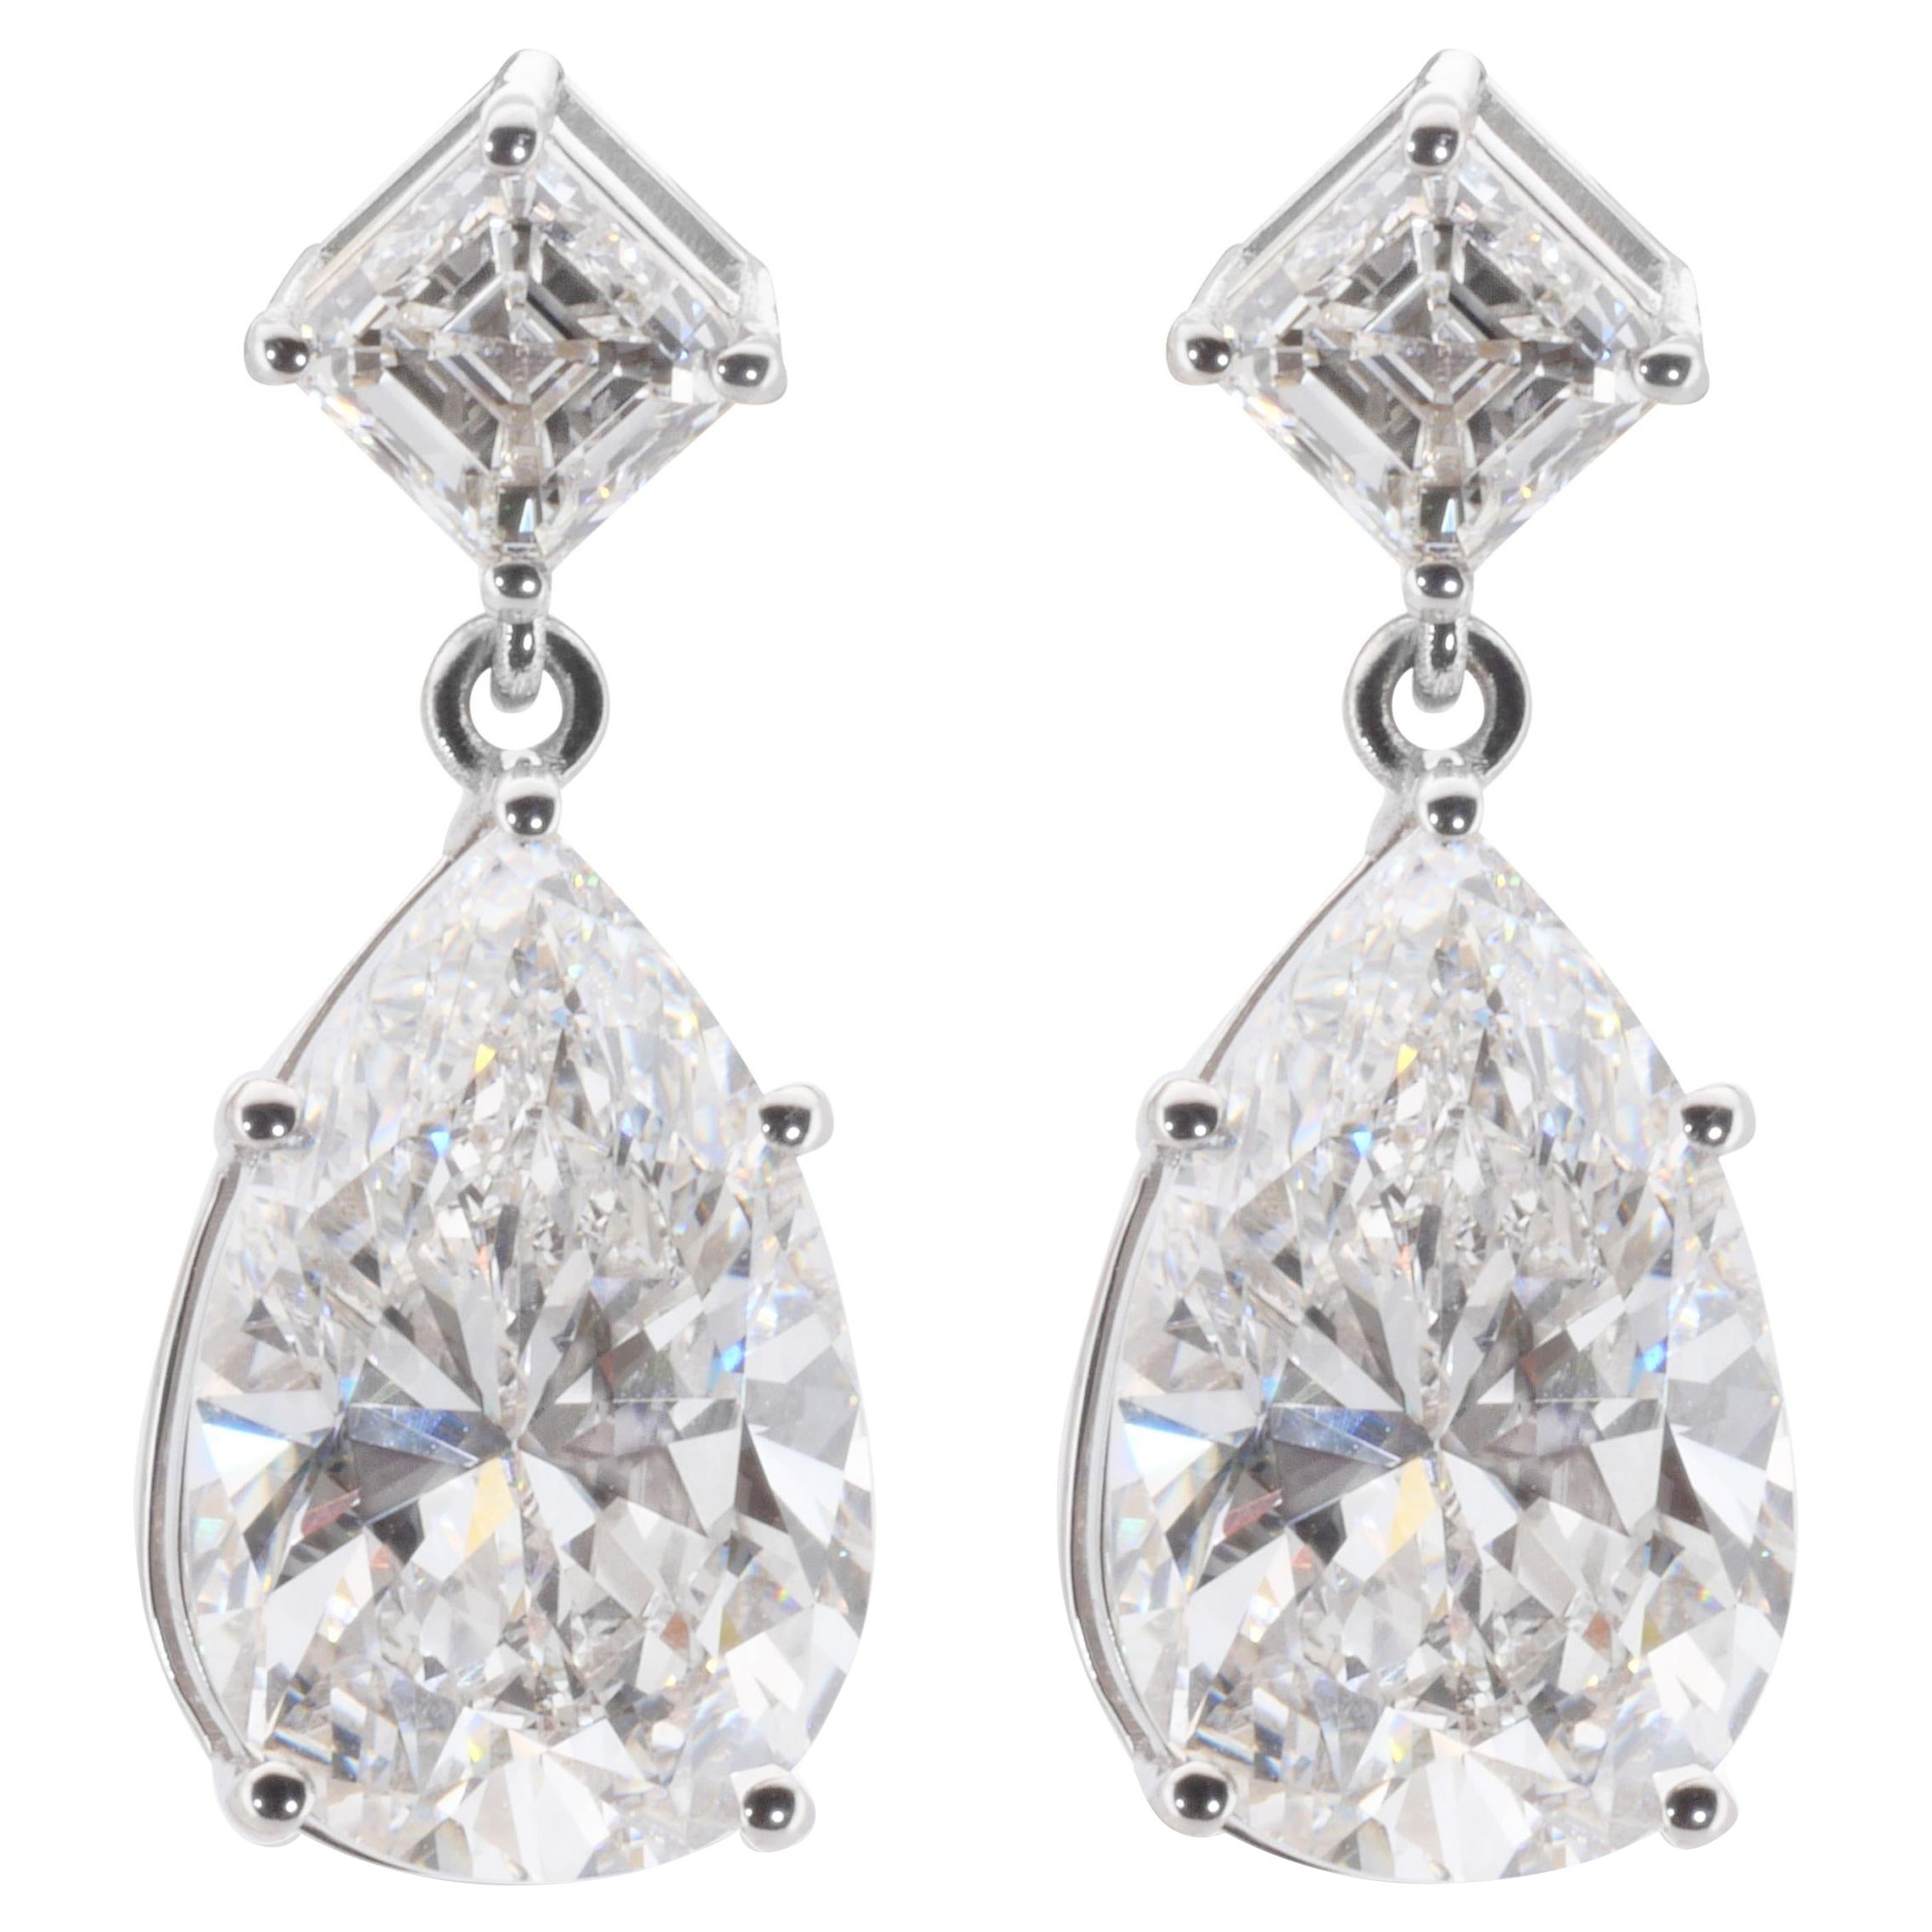 Dazzling 18k White Gold Earrings w/ 14.19 Carat Natural Diamonds GIA Certificate